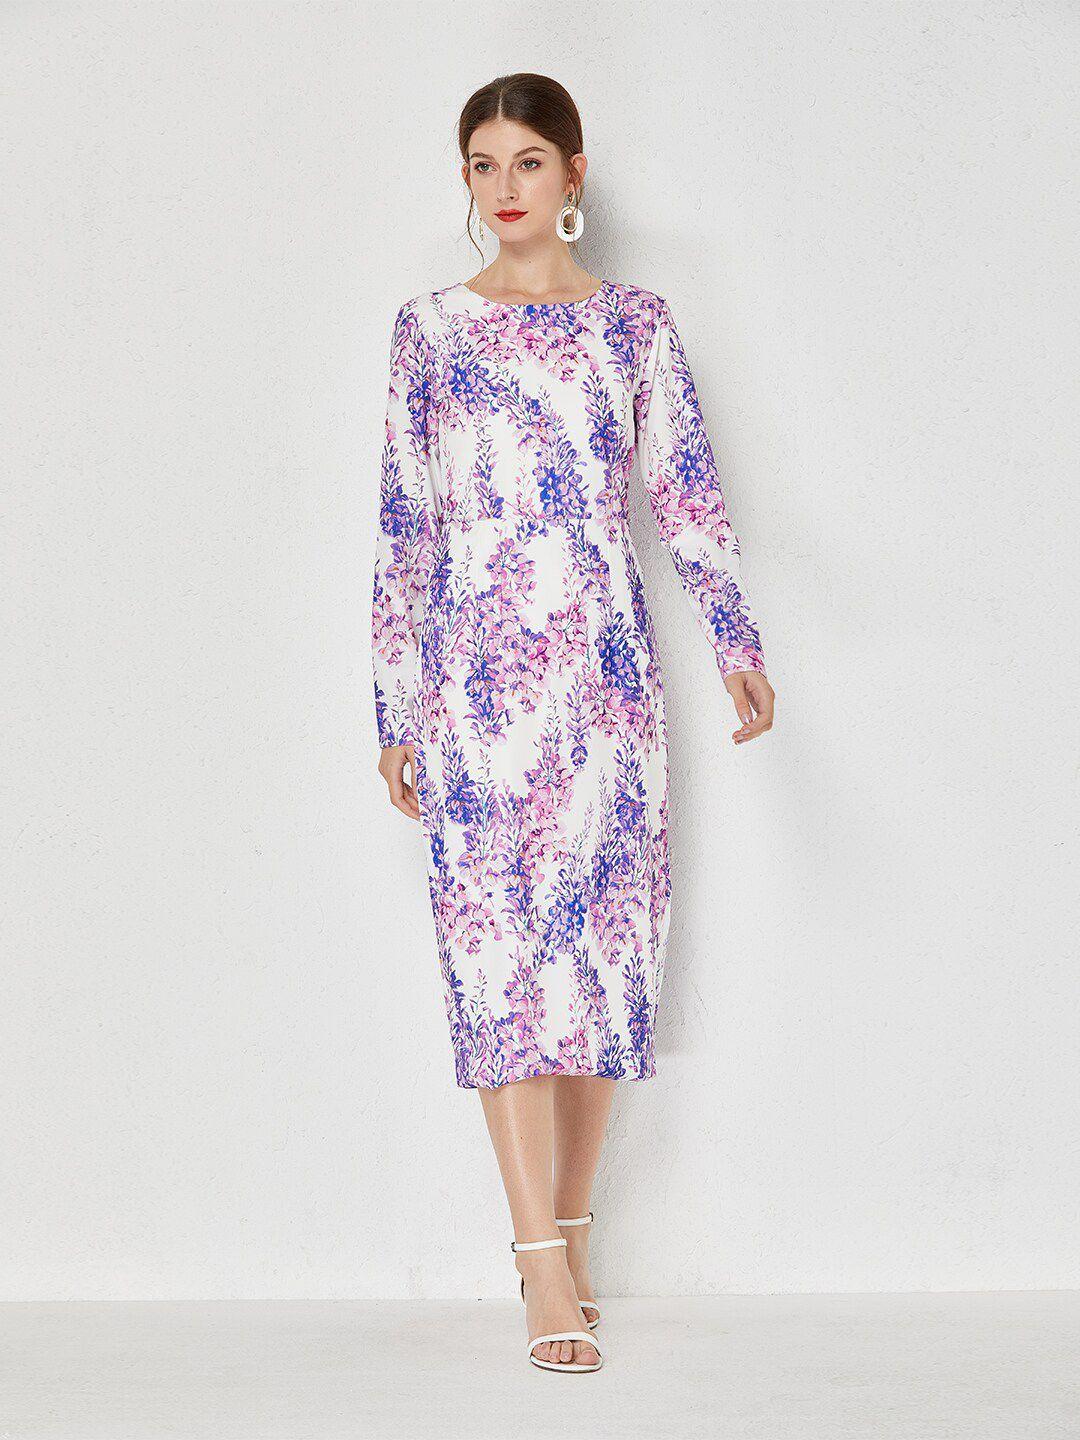 jc collection purple floral sheath midi dress